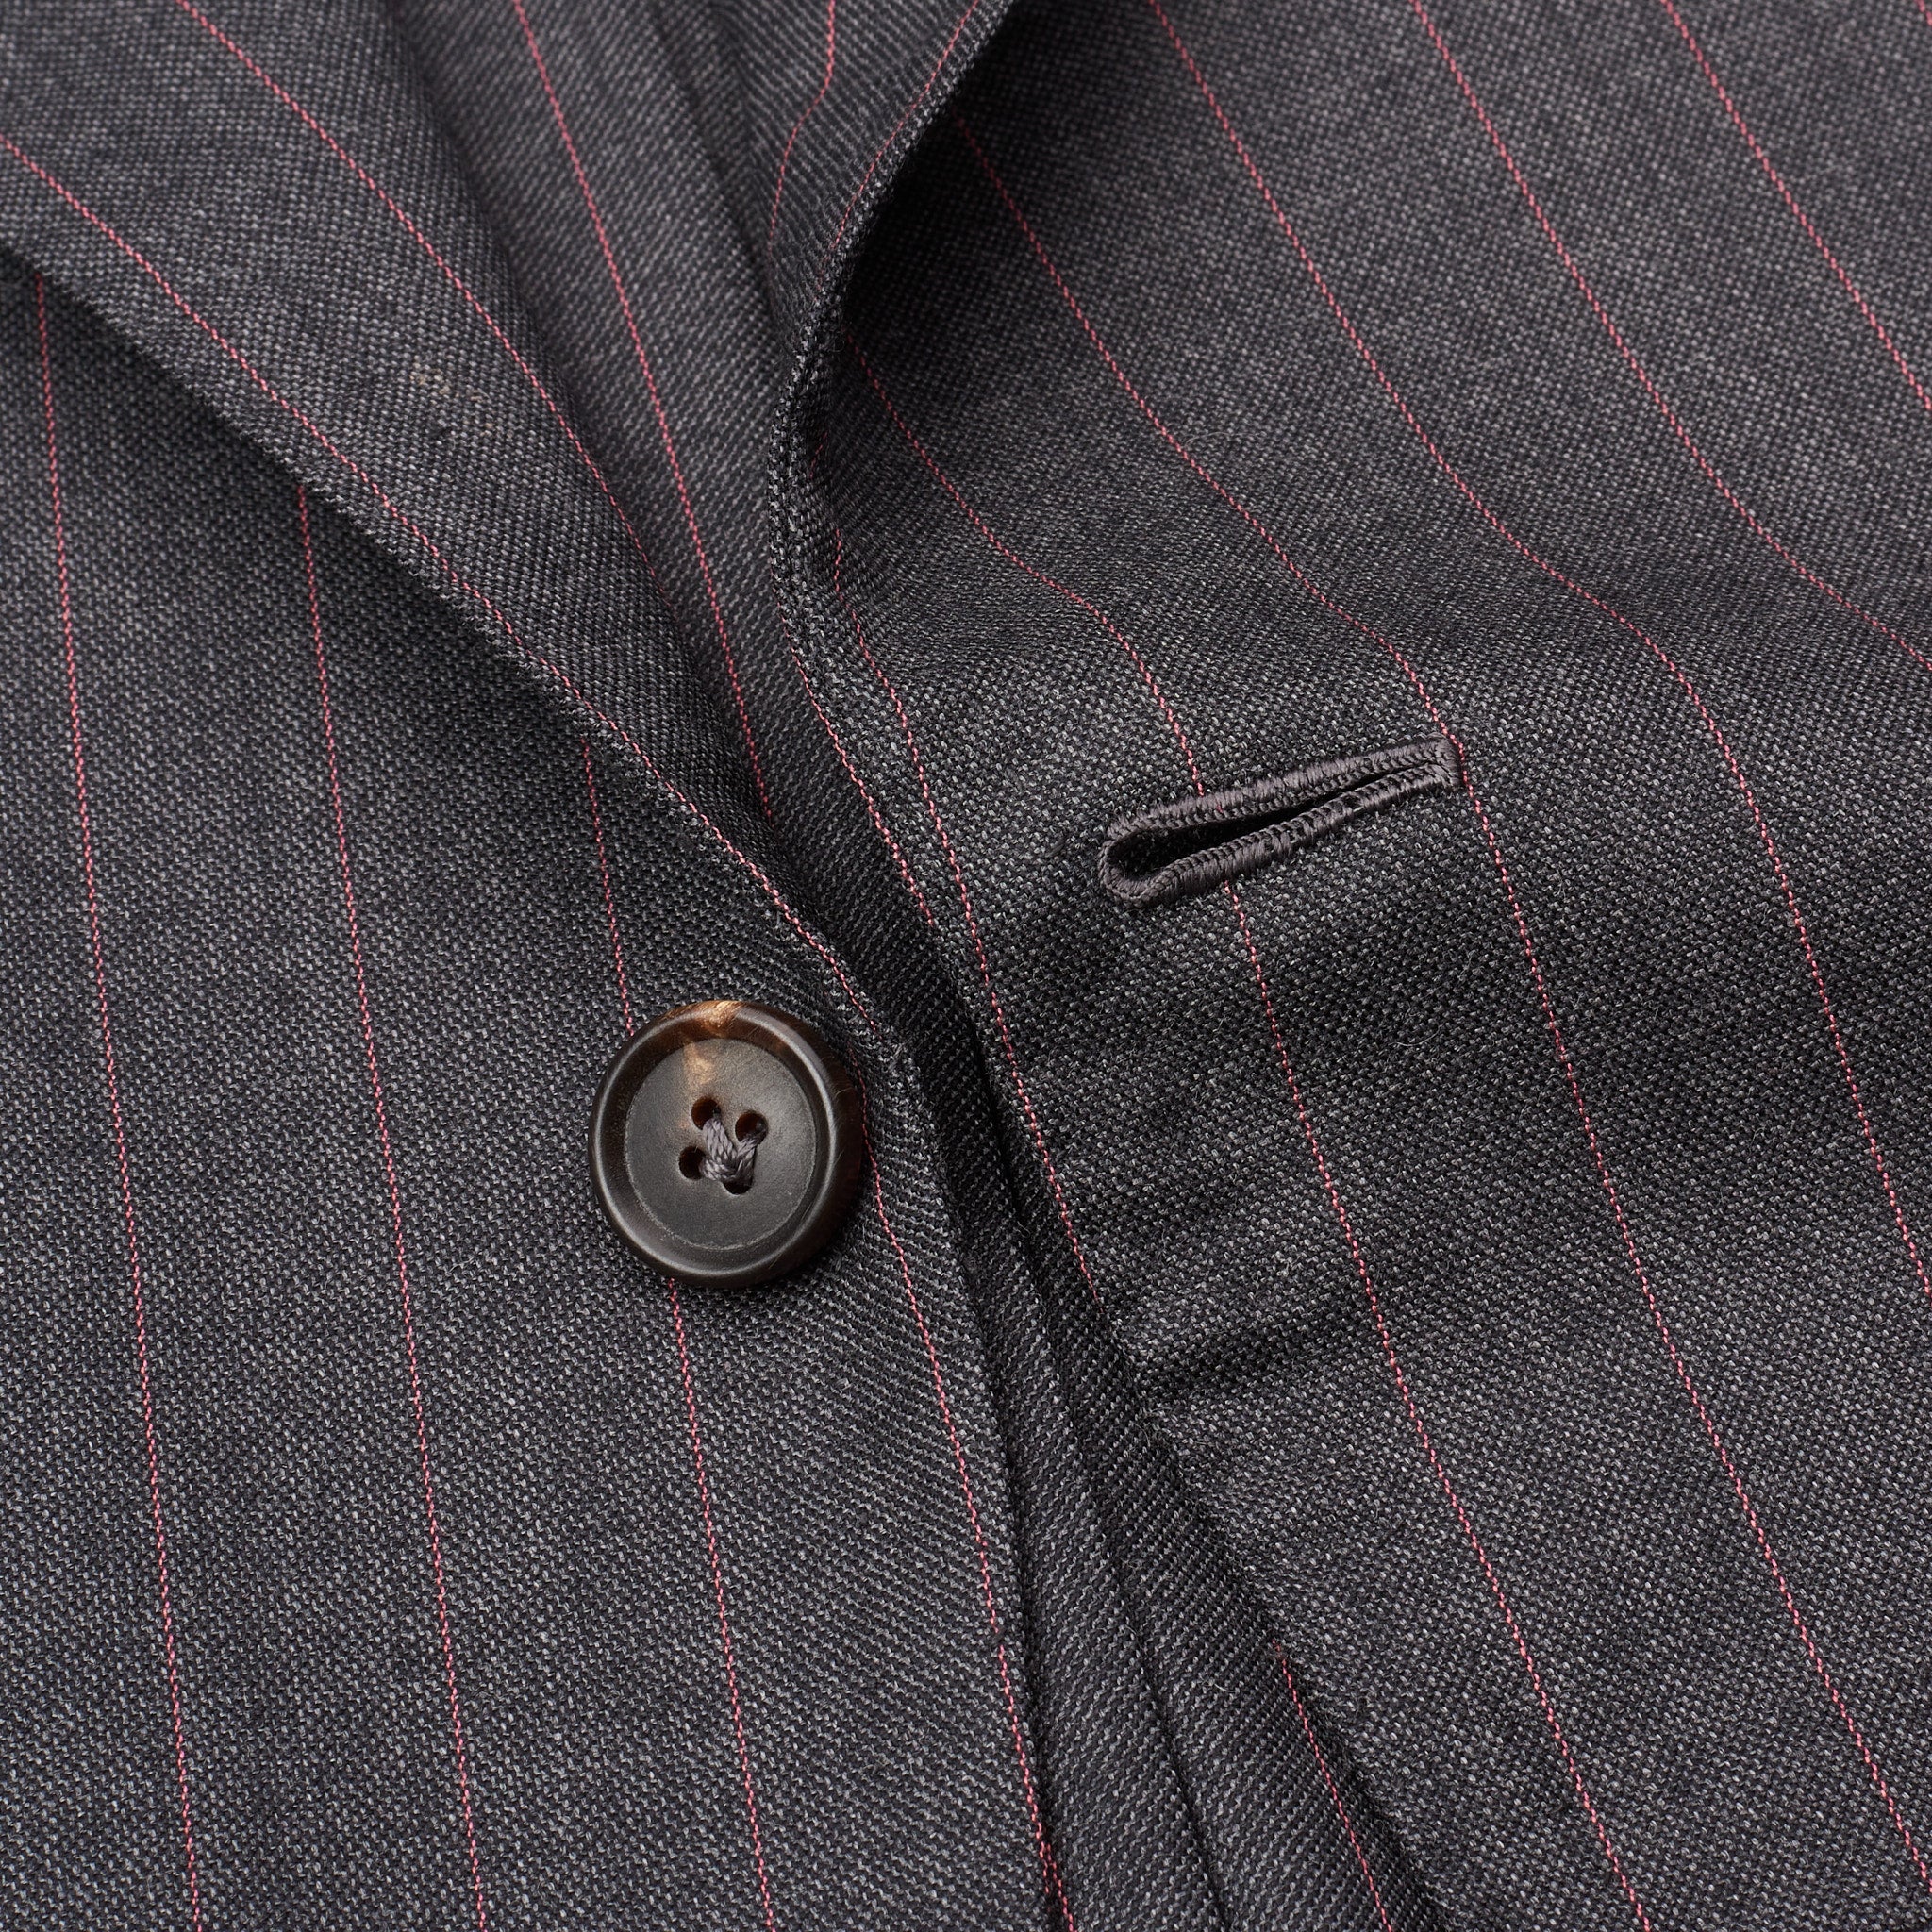 Sartoria CHIAIA Napoli Handmade Bespoke Gray Striped Wool Suit EU 50 NEW US 40 SARTORIA CHIAIA